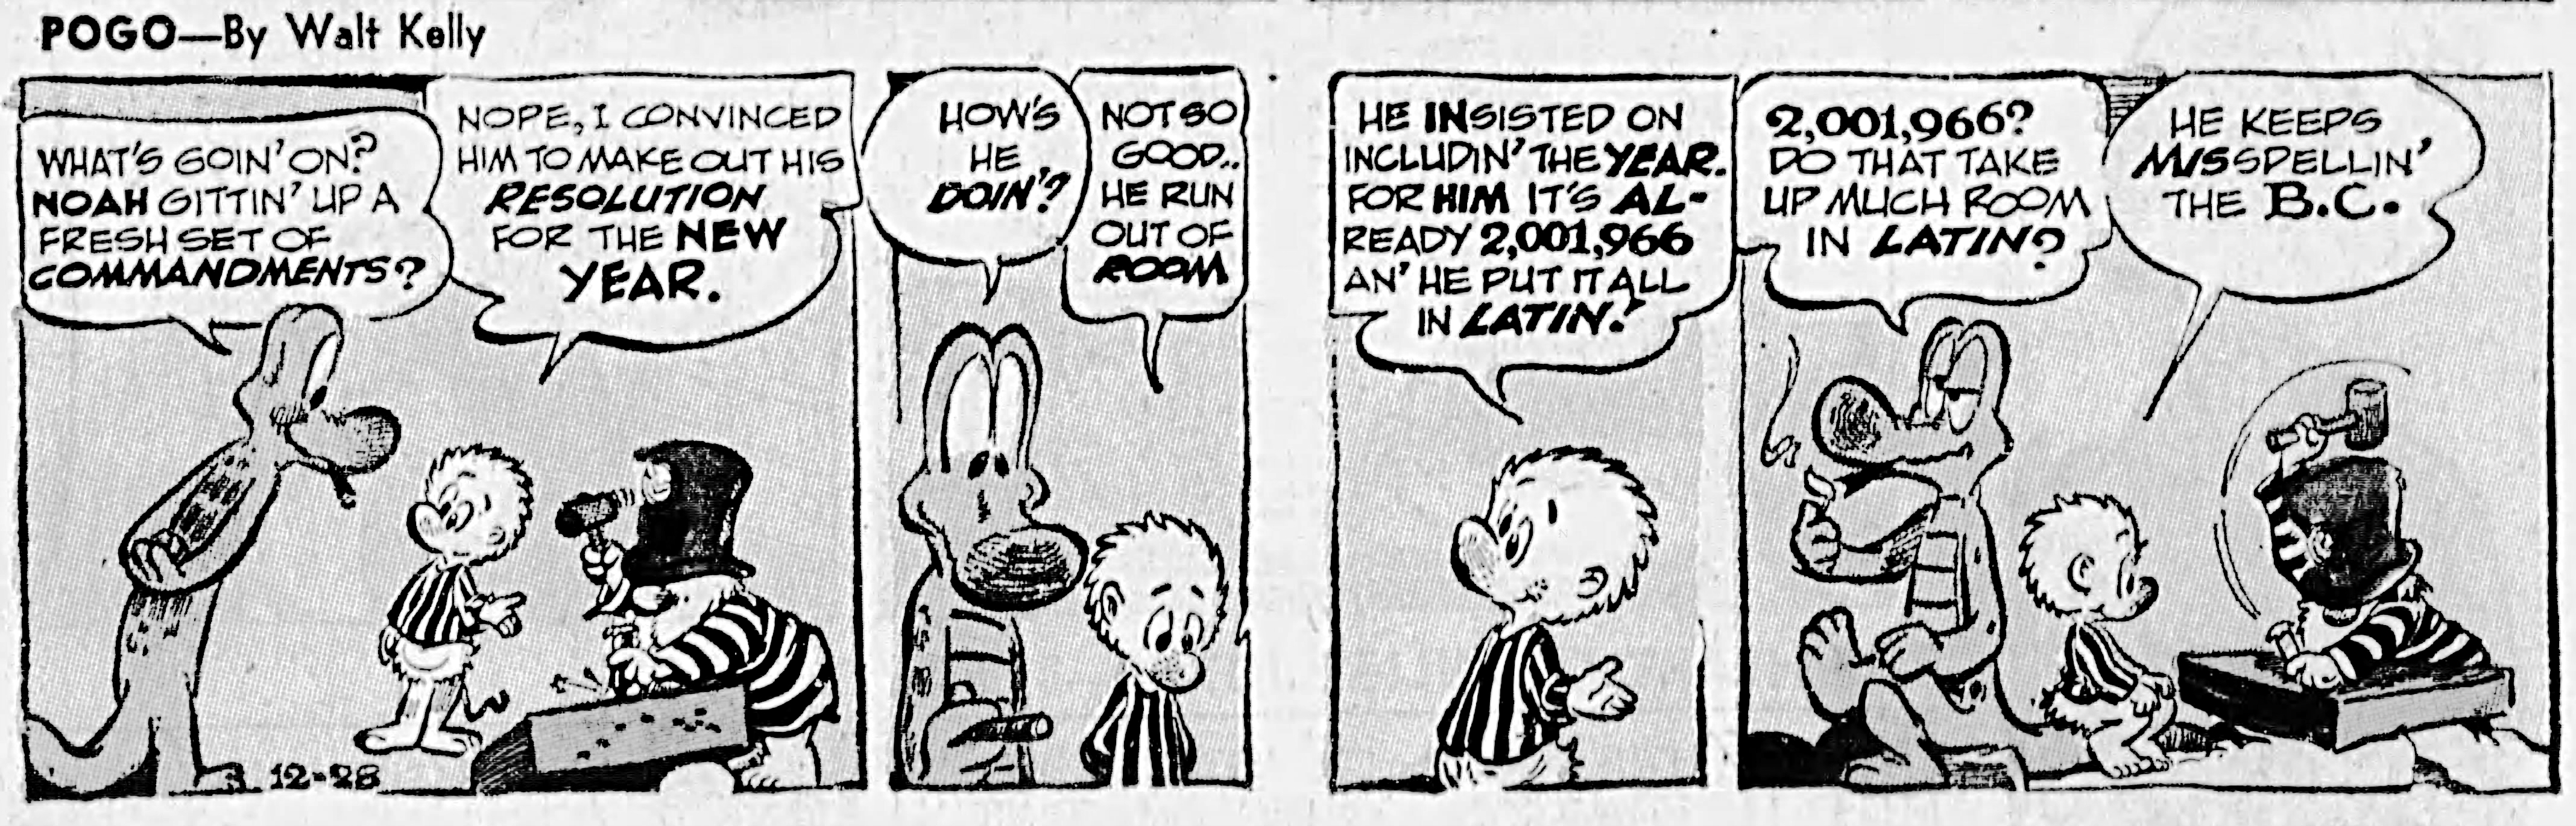 Pogo, December 28, 1966